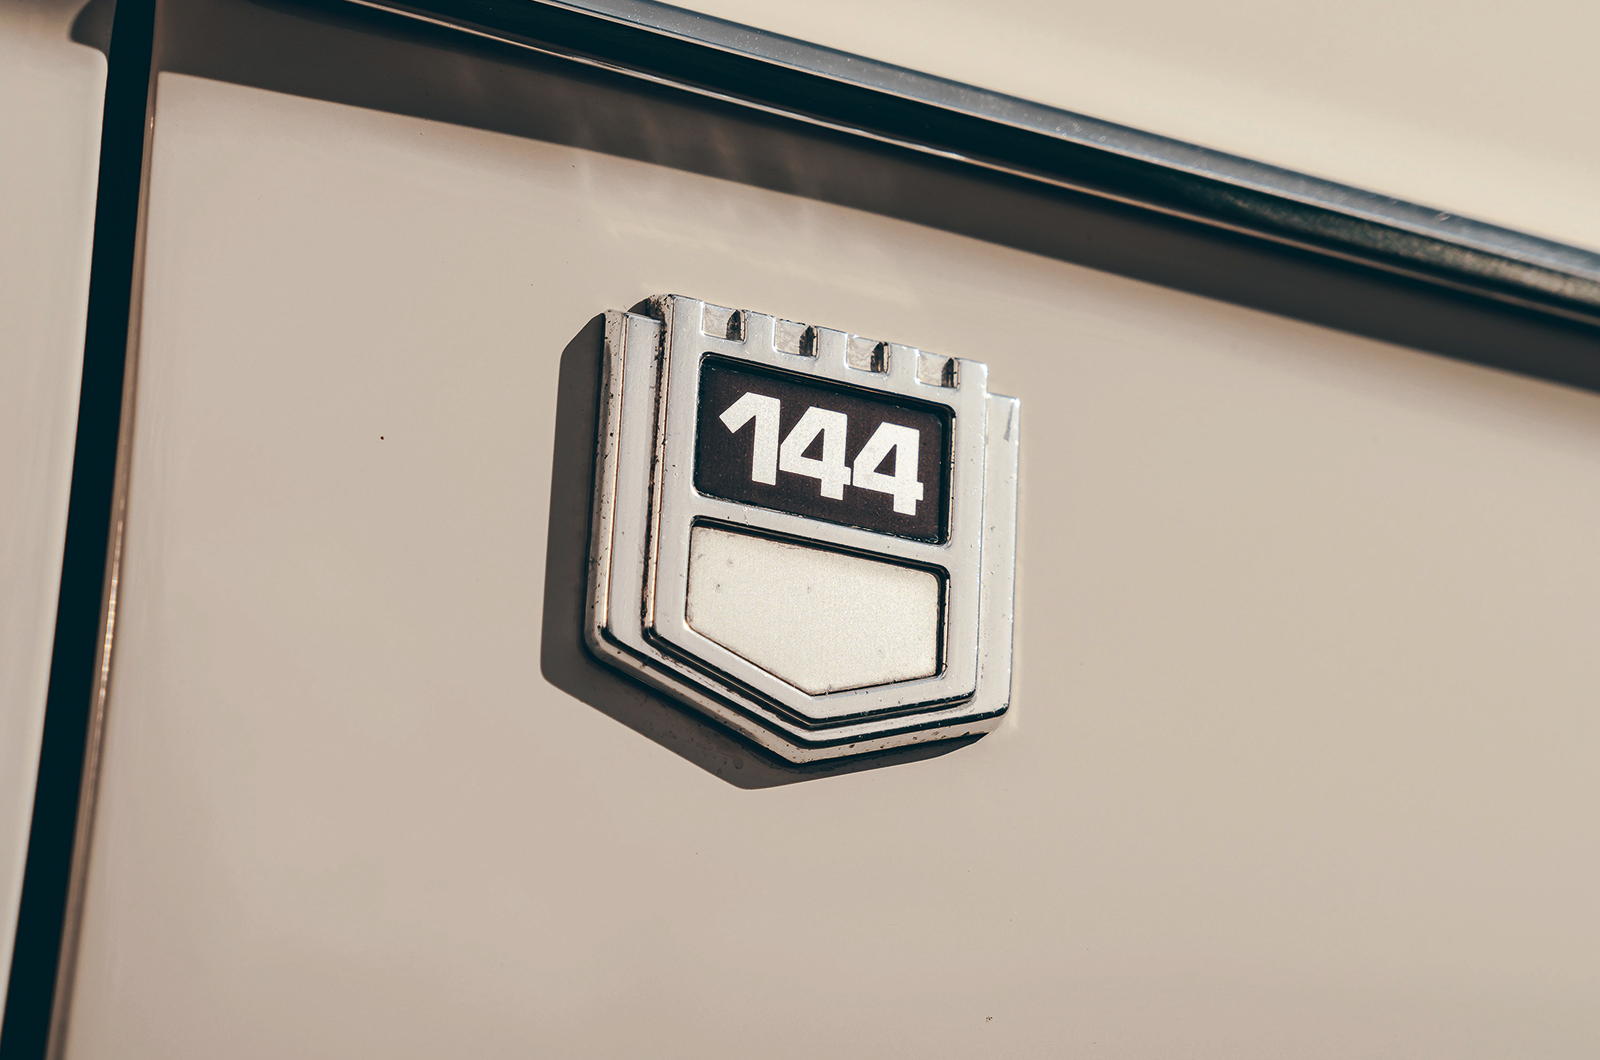 Classic & Sports Car – Volvo 144E: return of the Saint